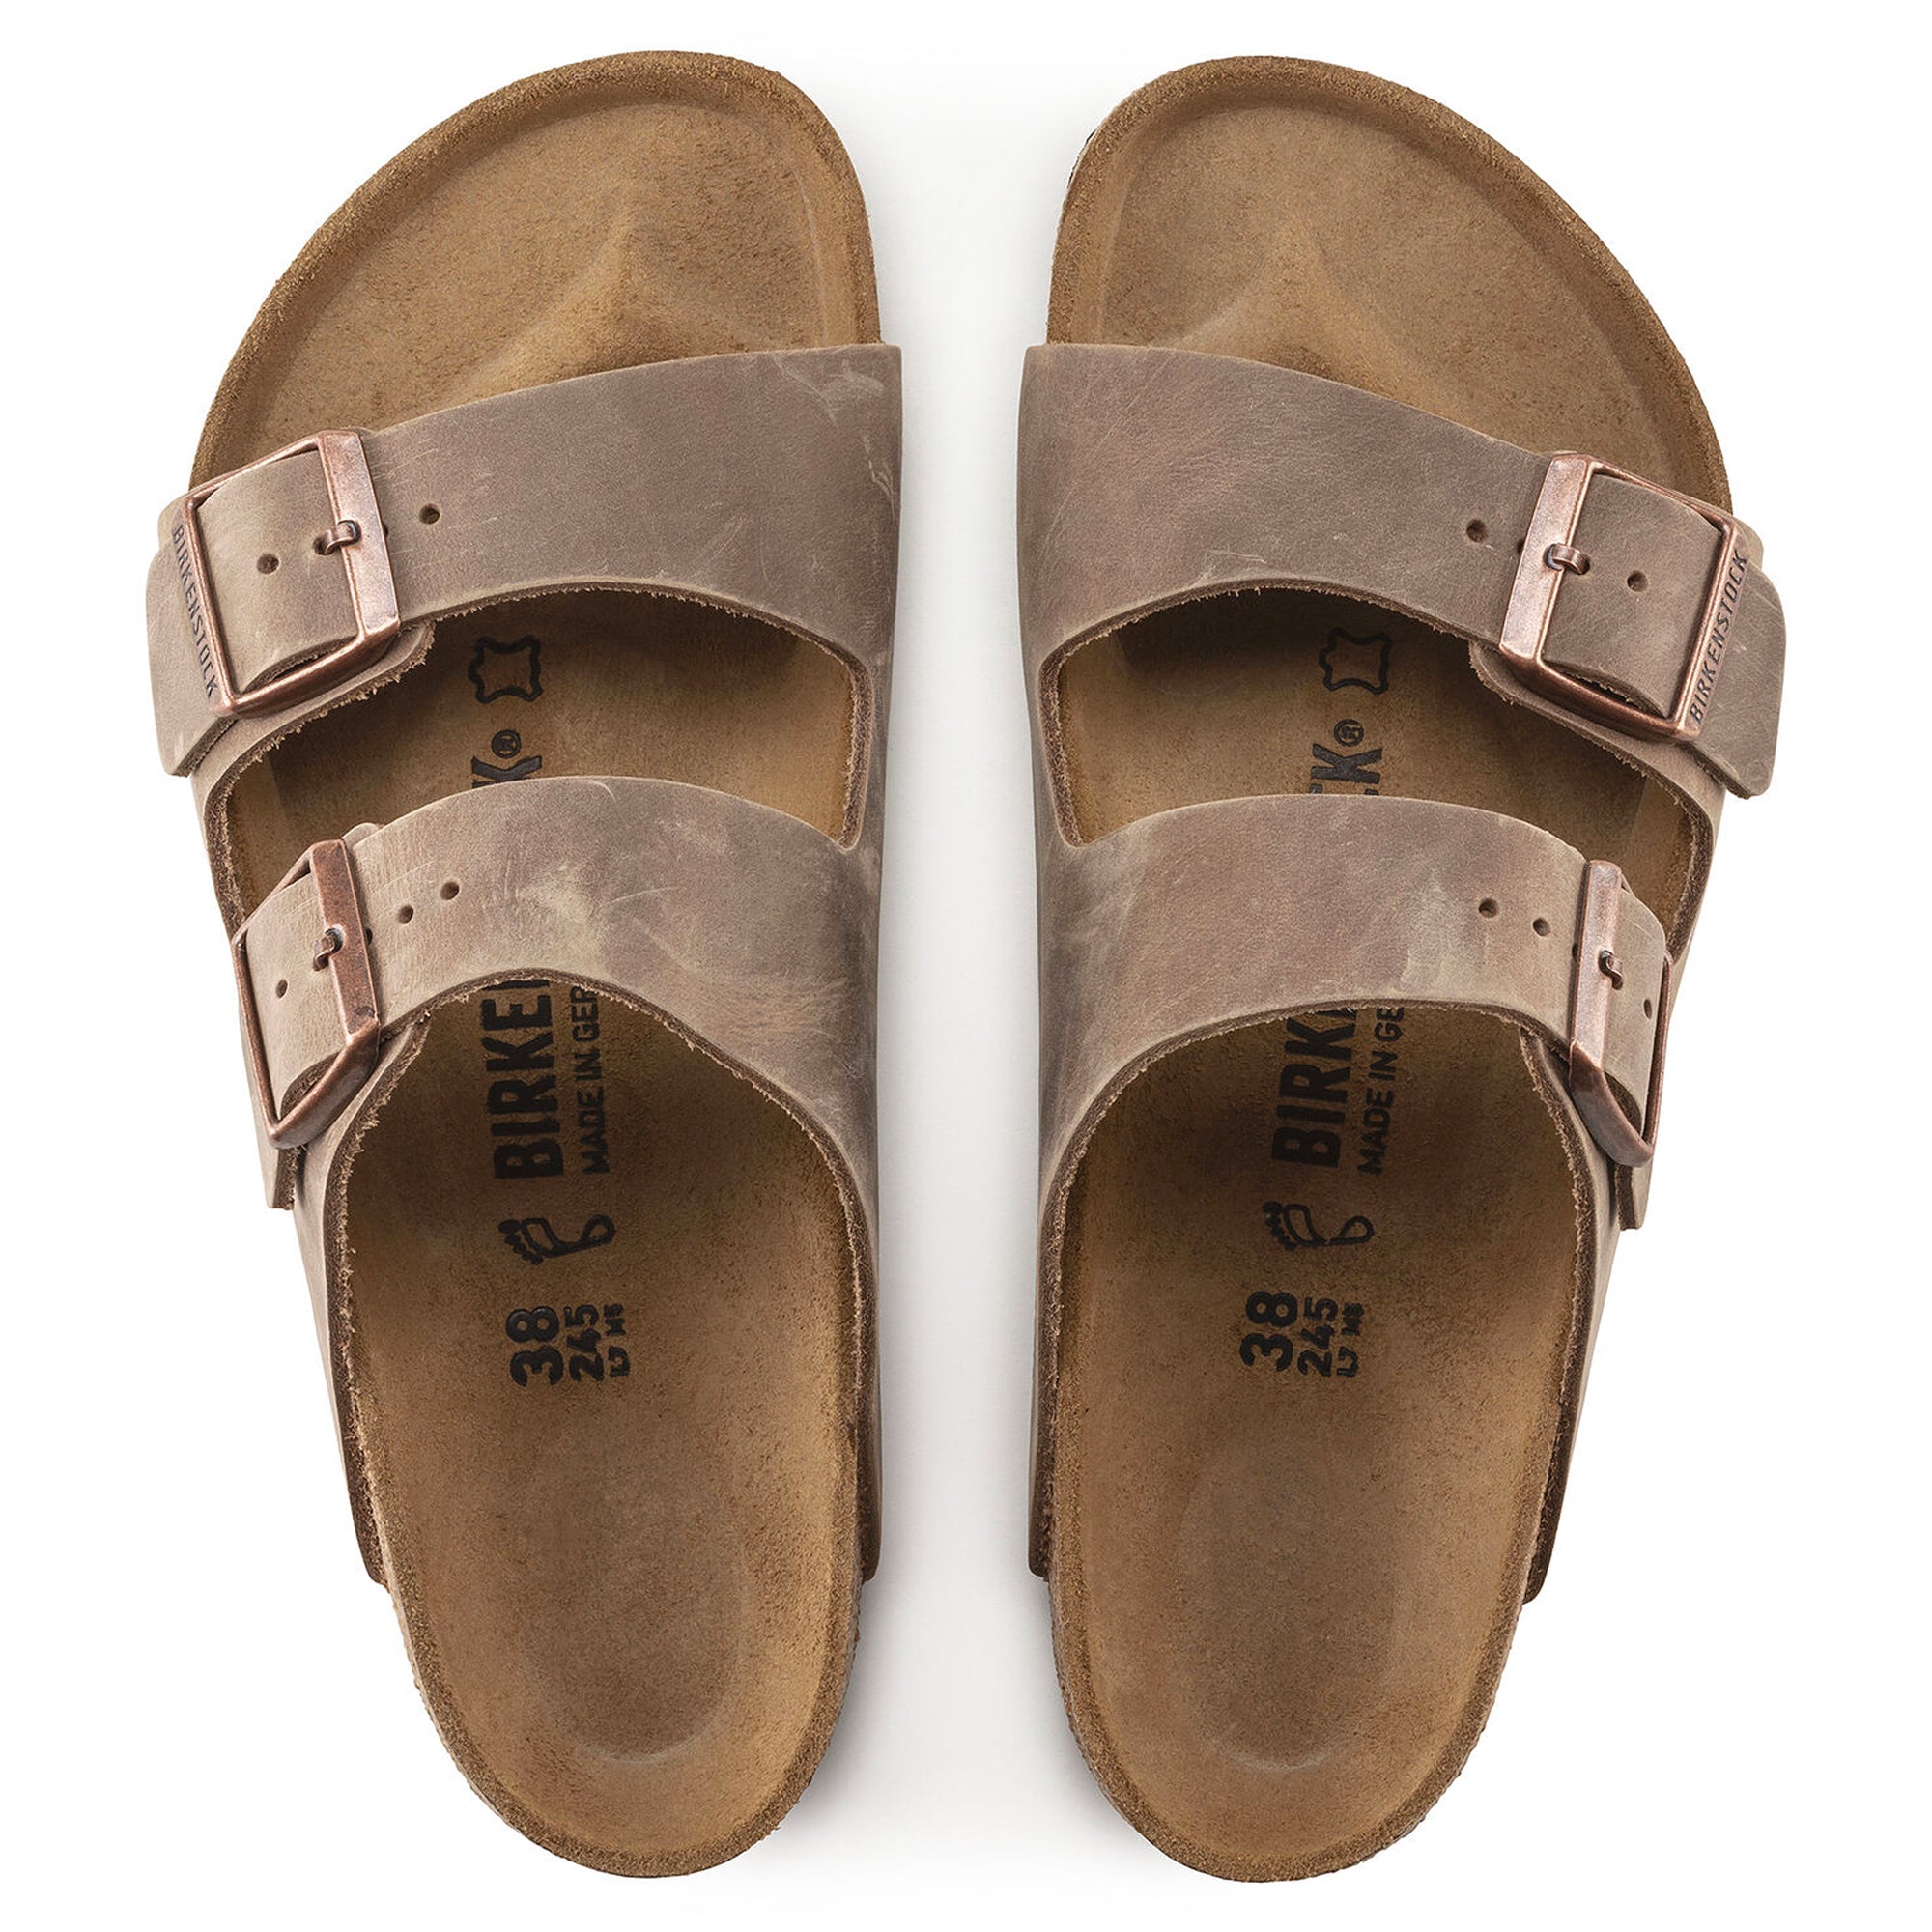 Birkenstock Arizona BS Sandals - Tobacco Brown Waxy Leather